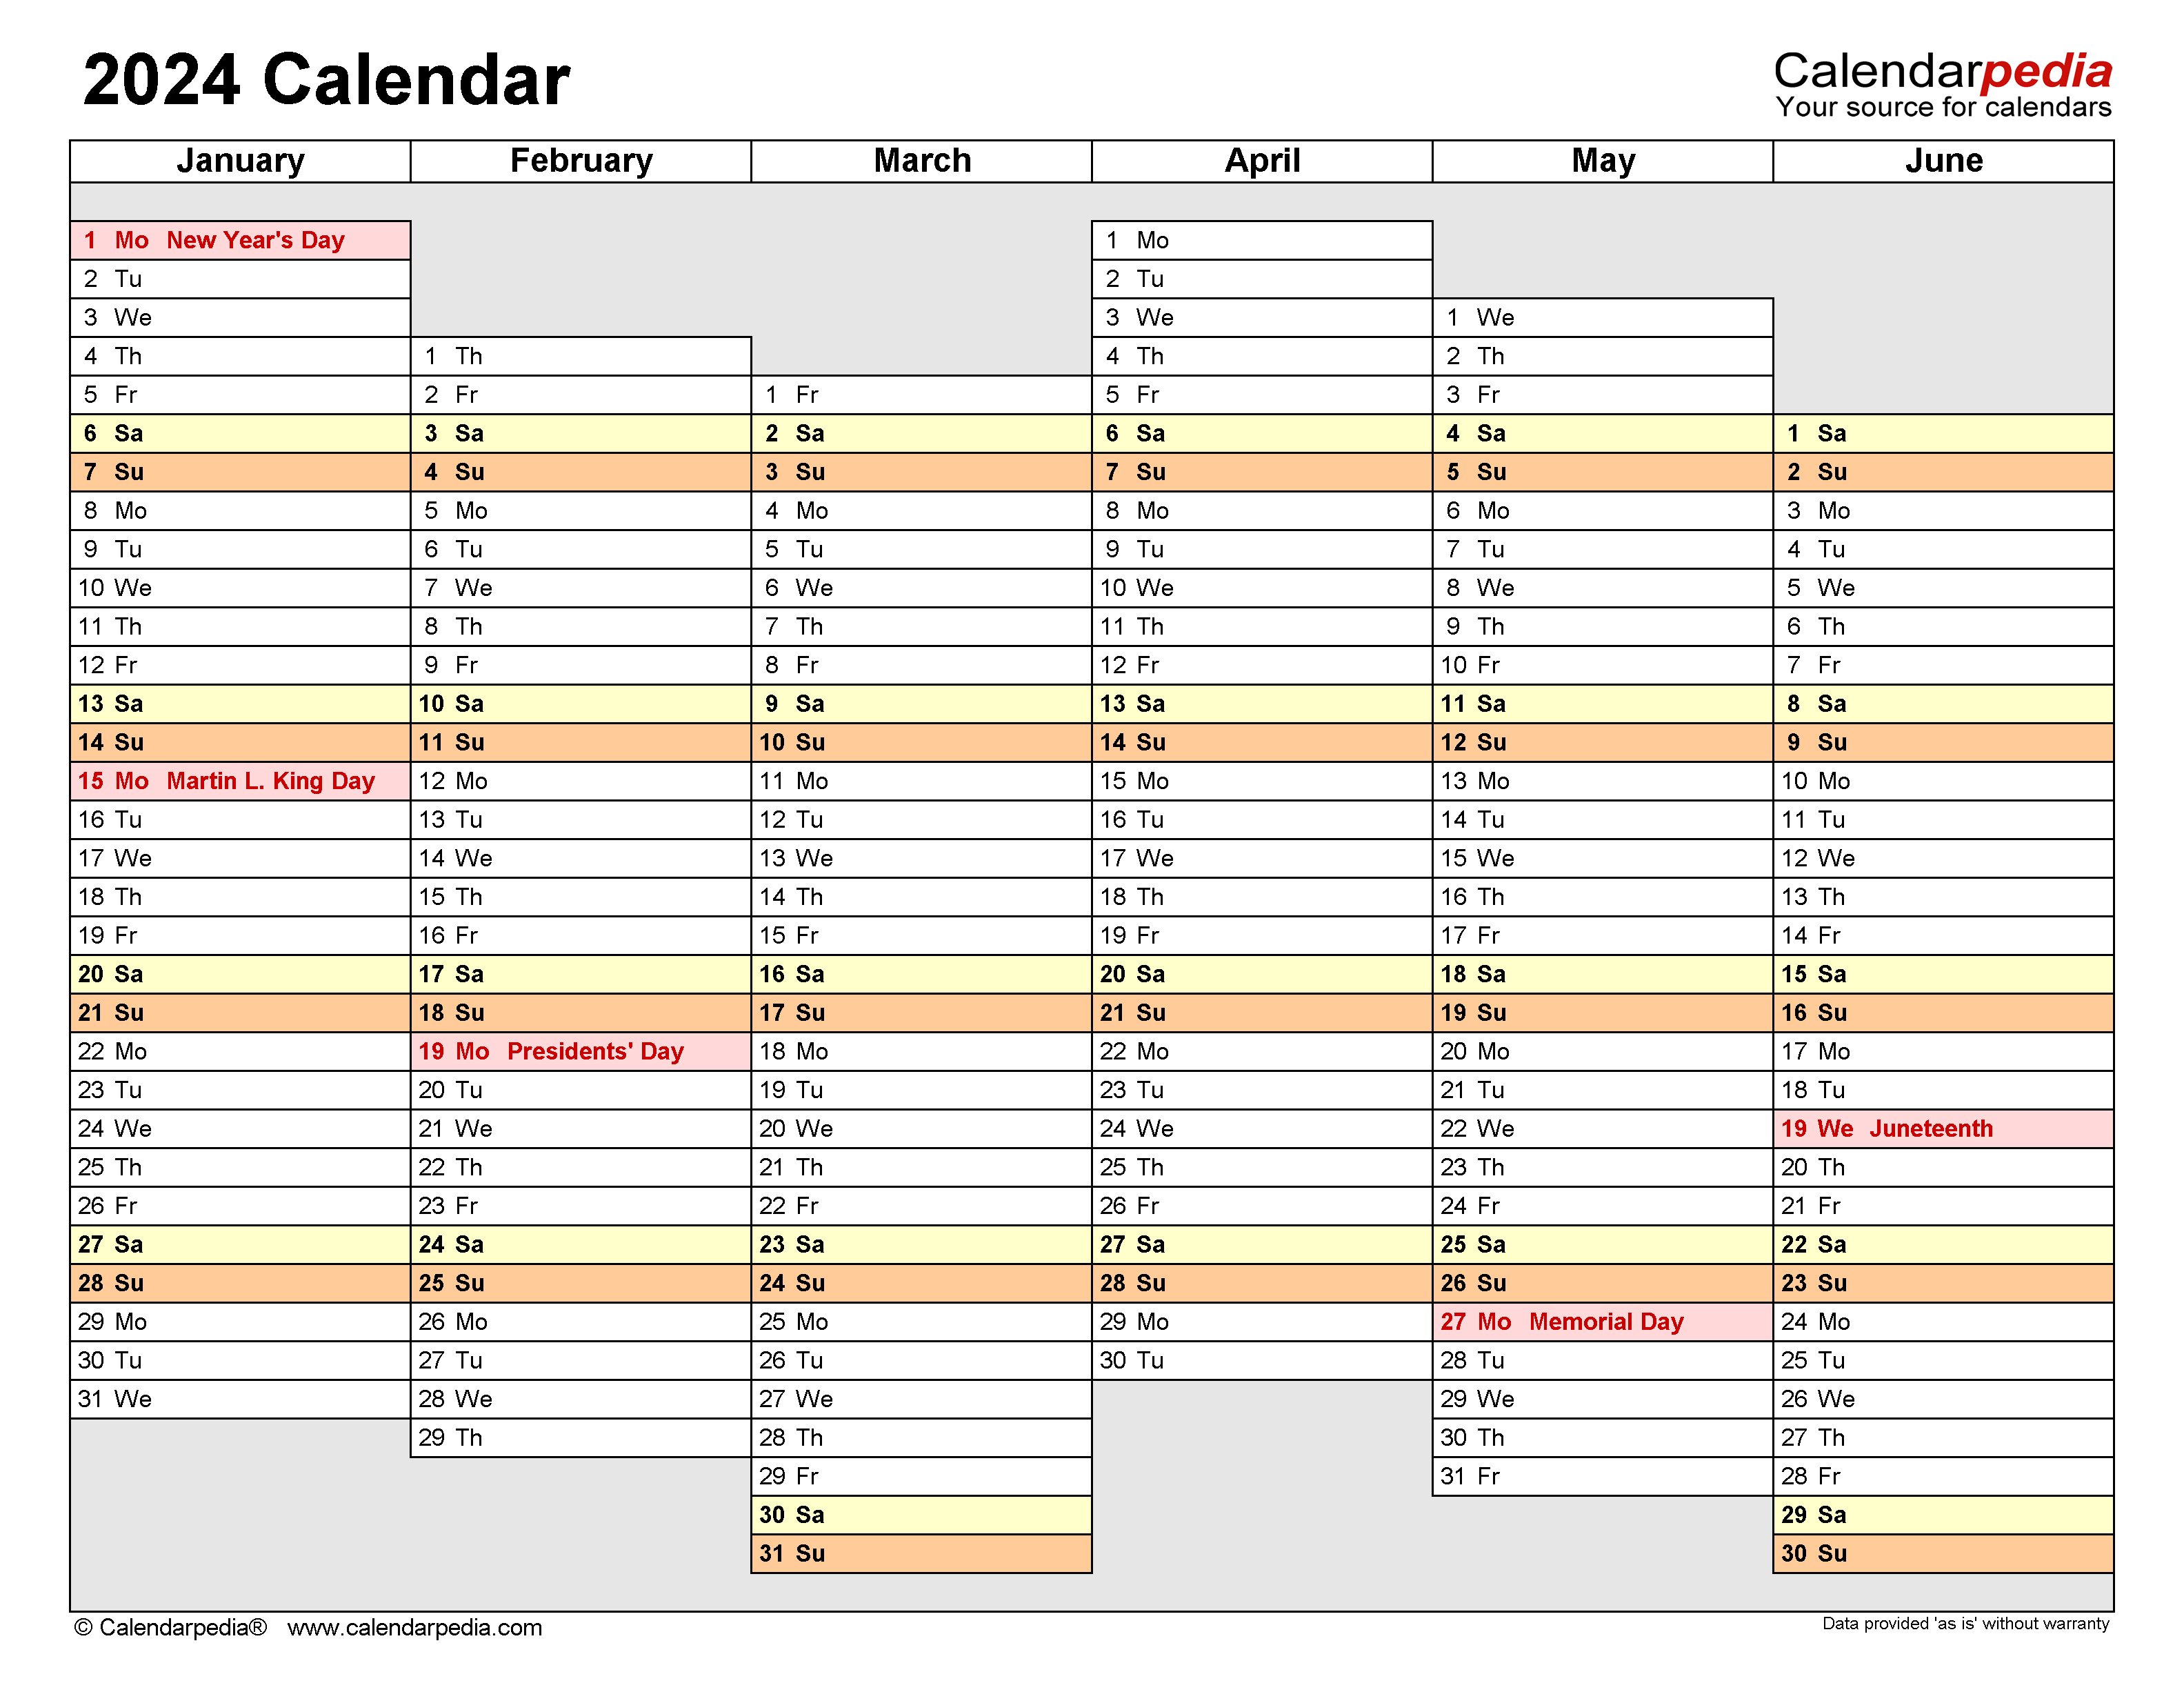 2024 Calendar - Free Printable Excel Templates - Calendarpedia for 2024 Printable Calendar Excel